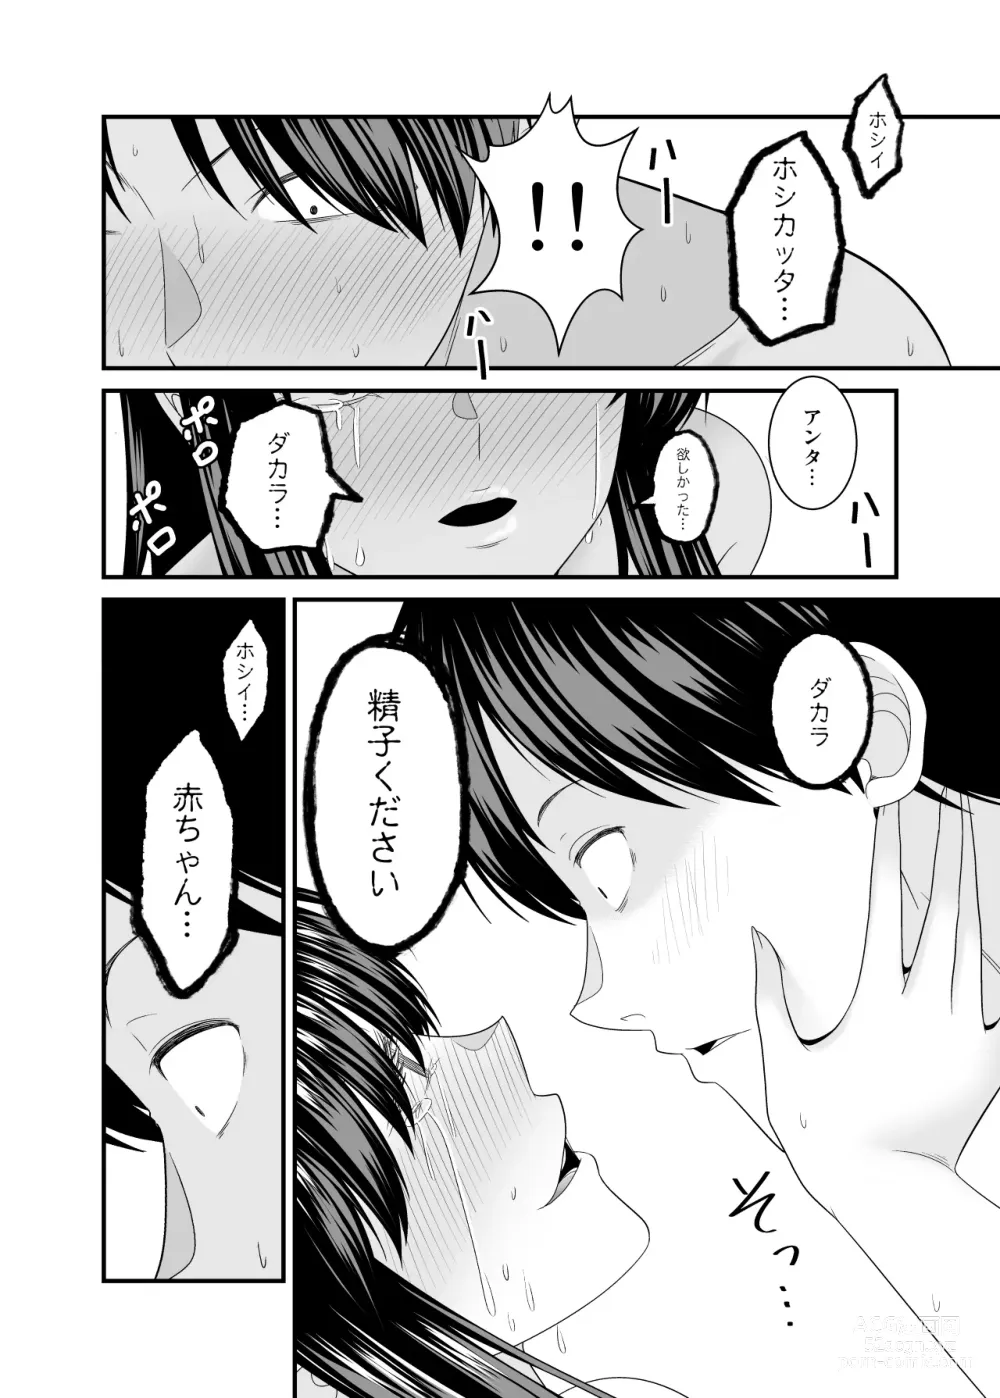 Page 43 of doujinshi ヤバい事故物件に女幽霊が出たけど無職底辺の俺はセックスしまくる